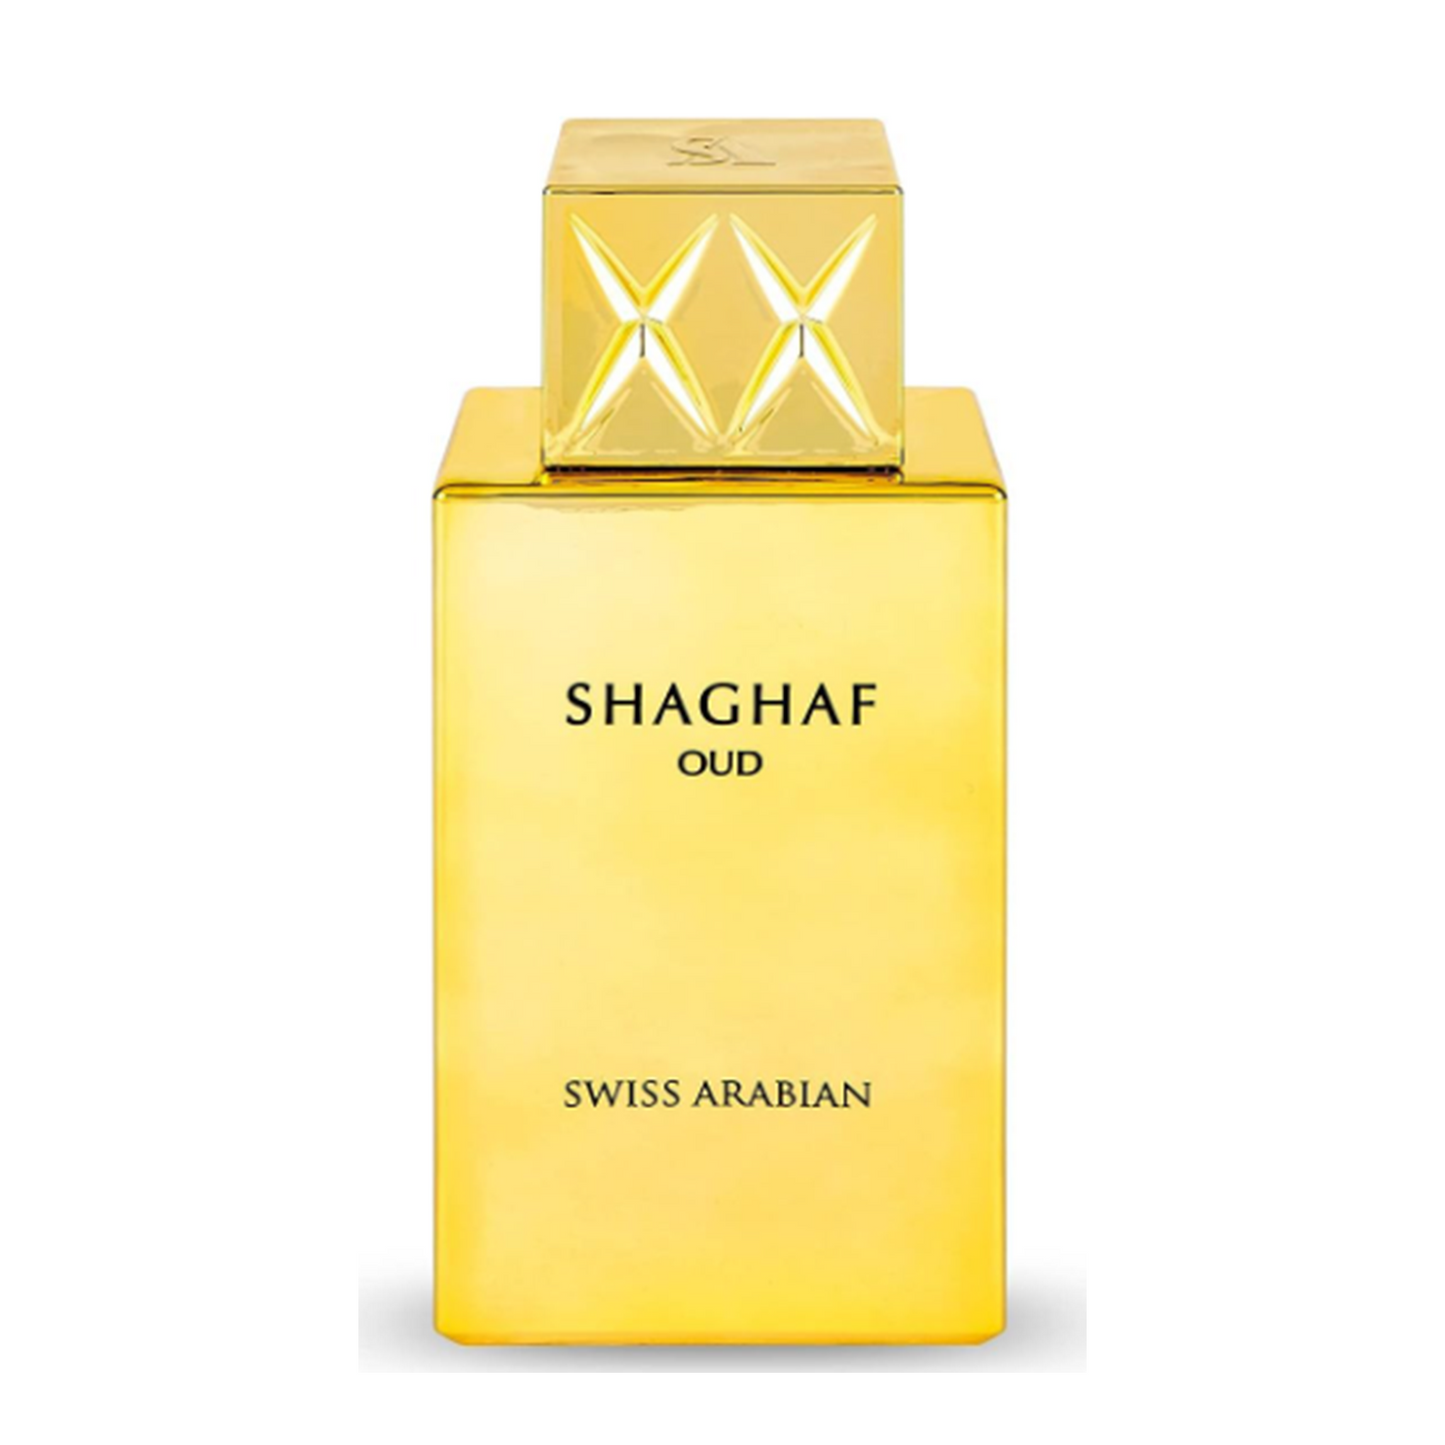 SWISS ARABIAN - Shaghaf Oud Duftprobe Parfümprobe Abfüllung